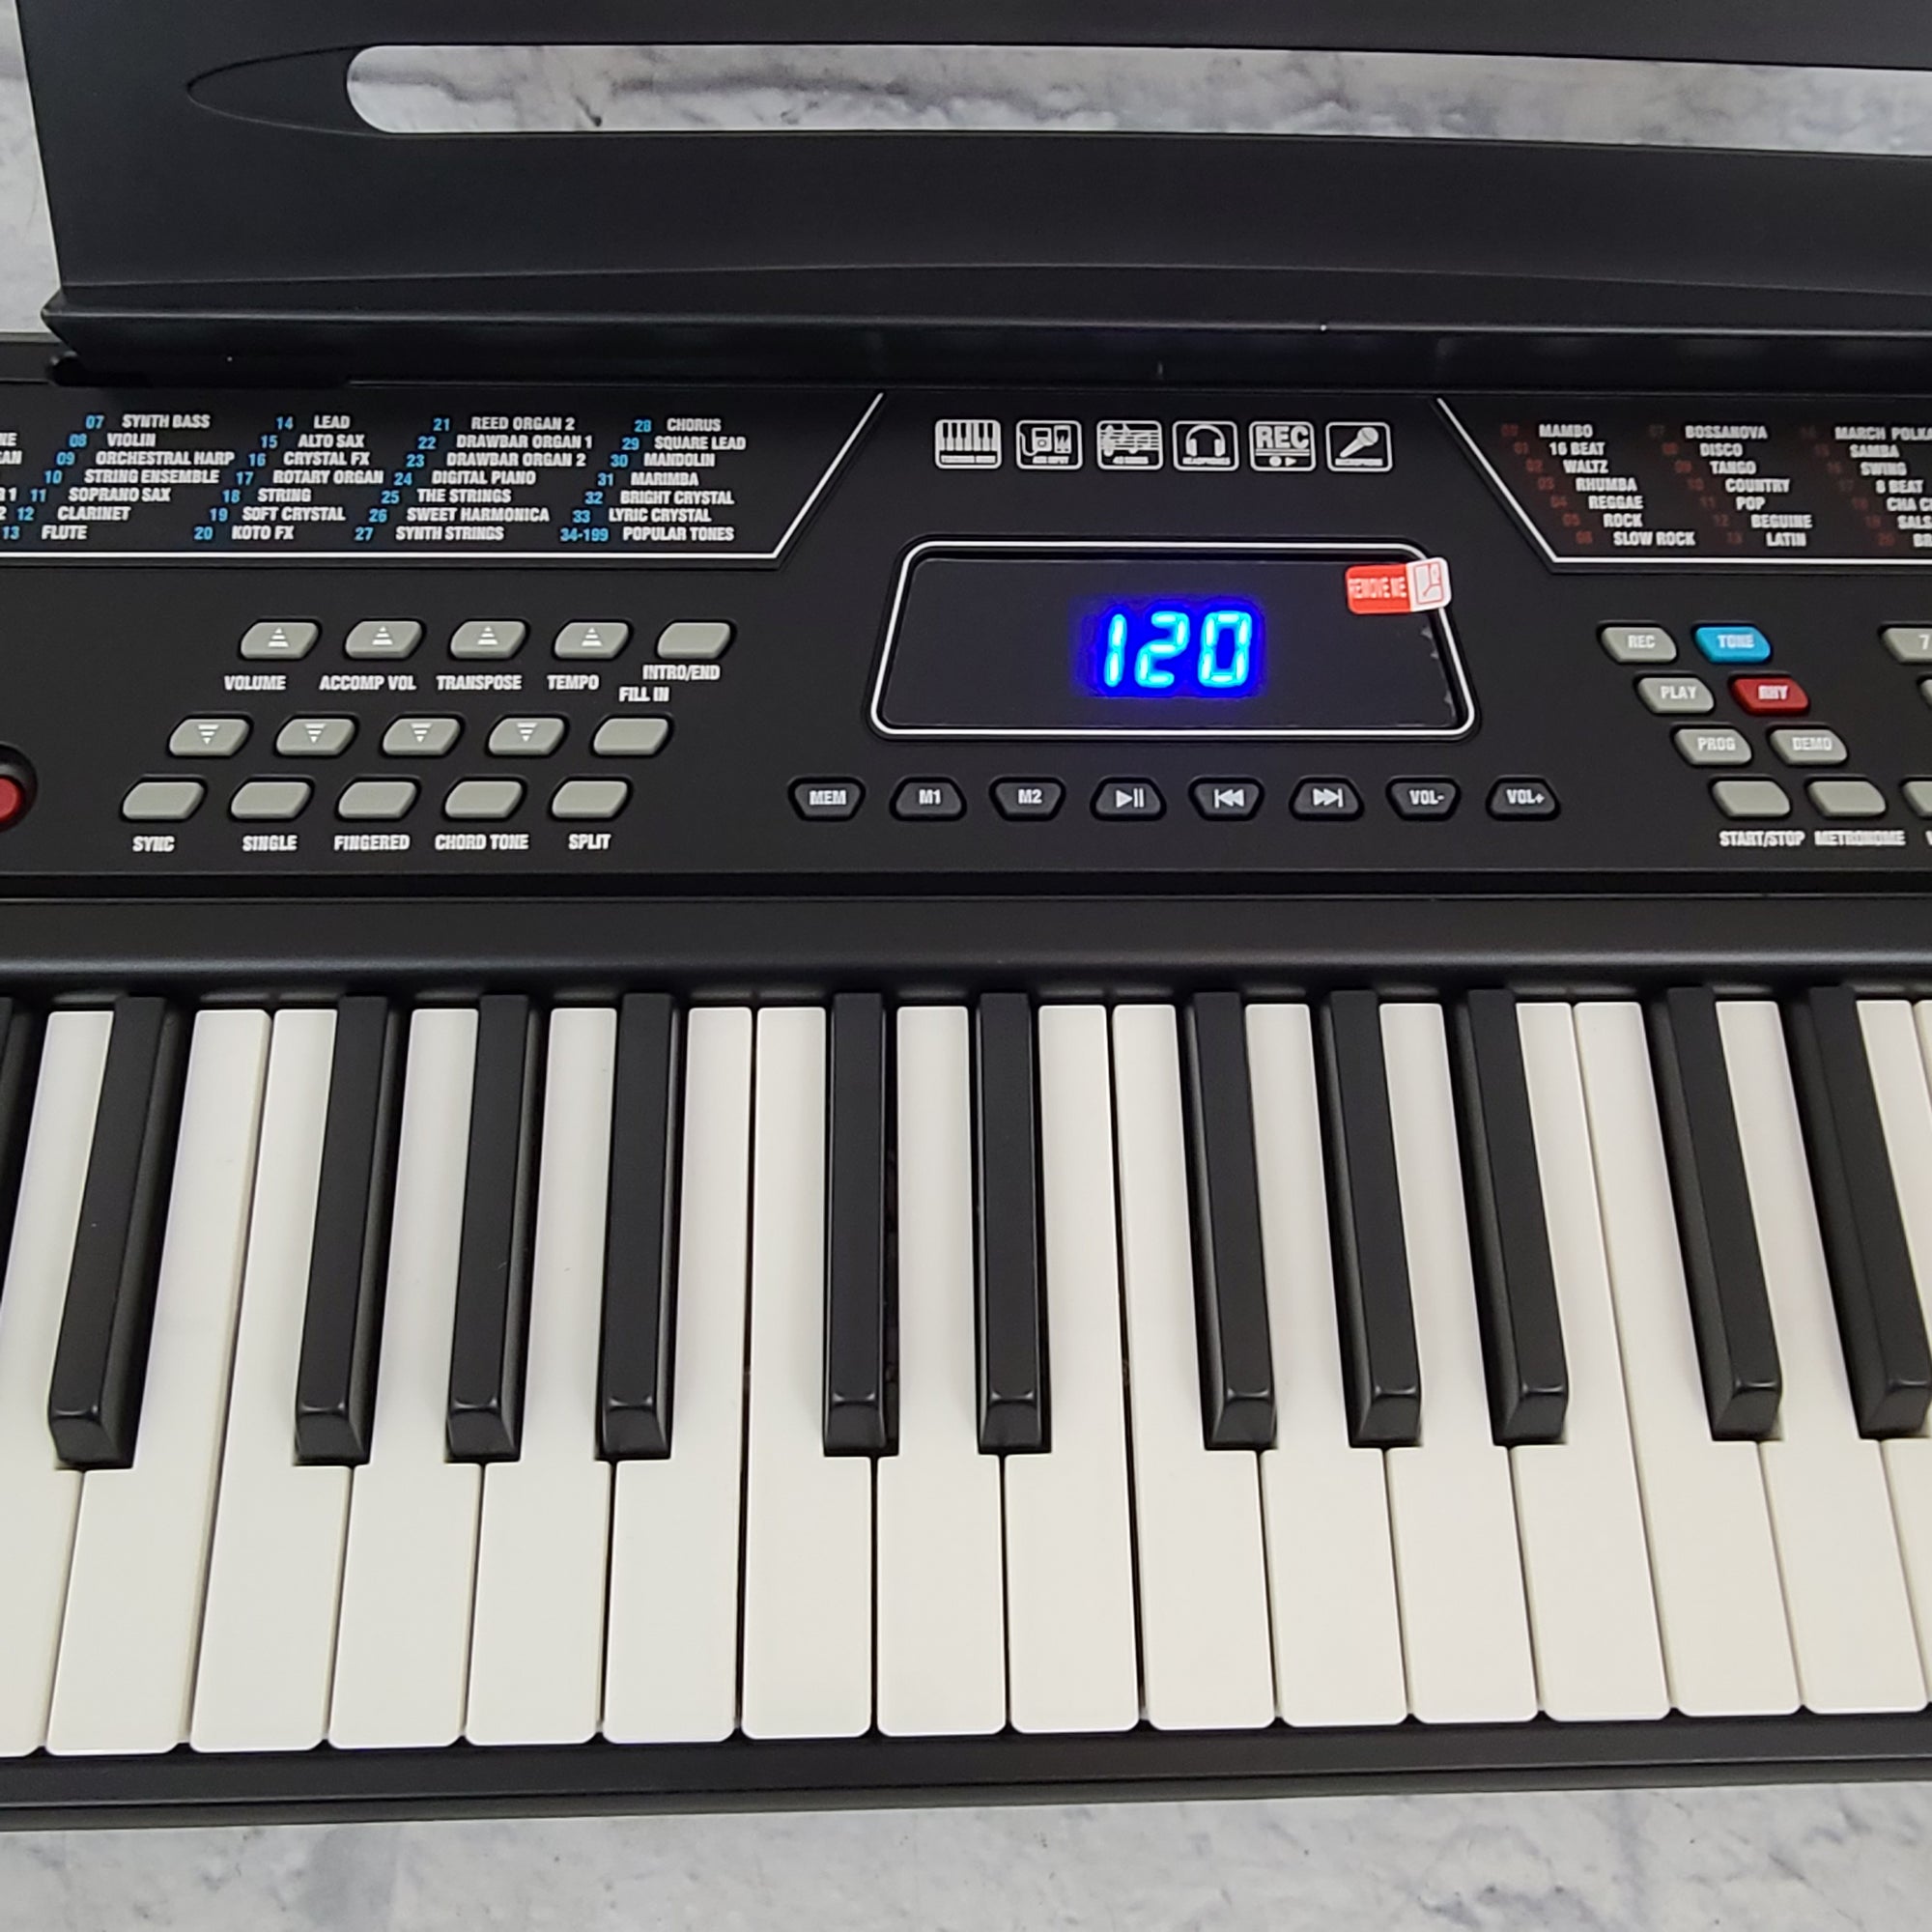 RockJam 61 Key Electronic Keyboard Piano